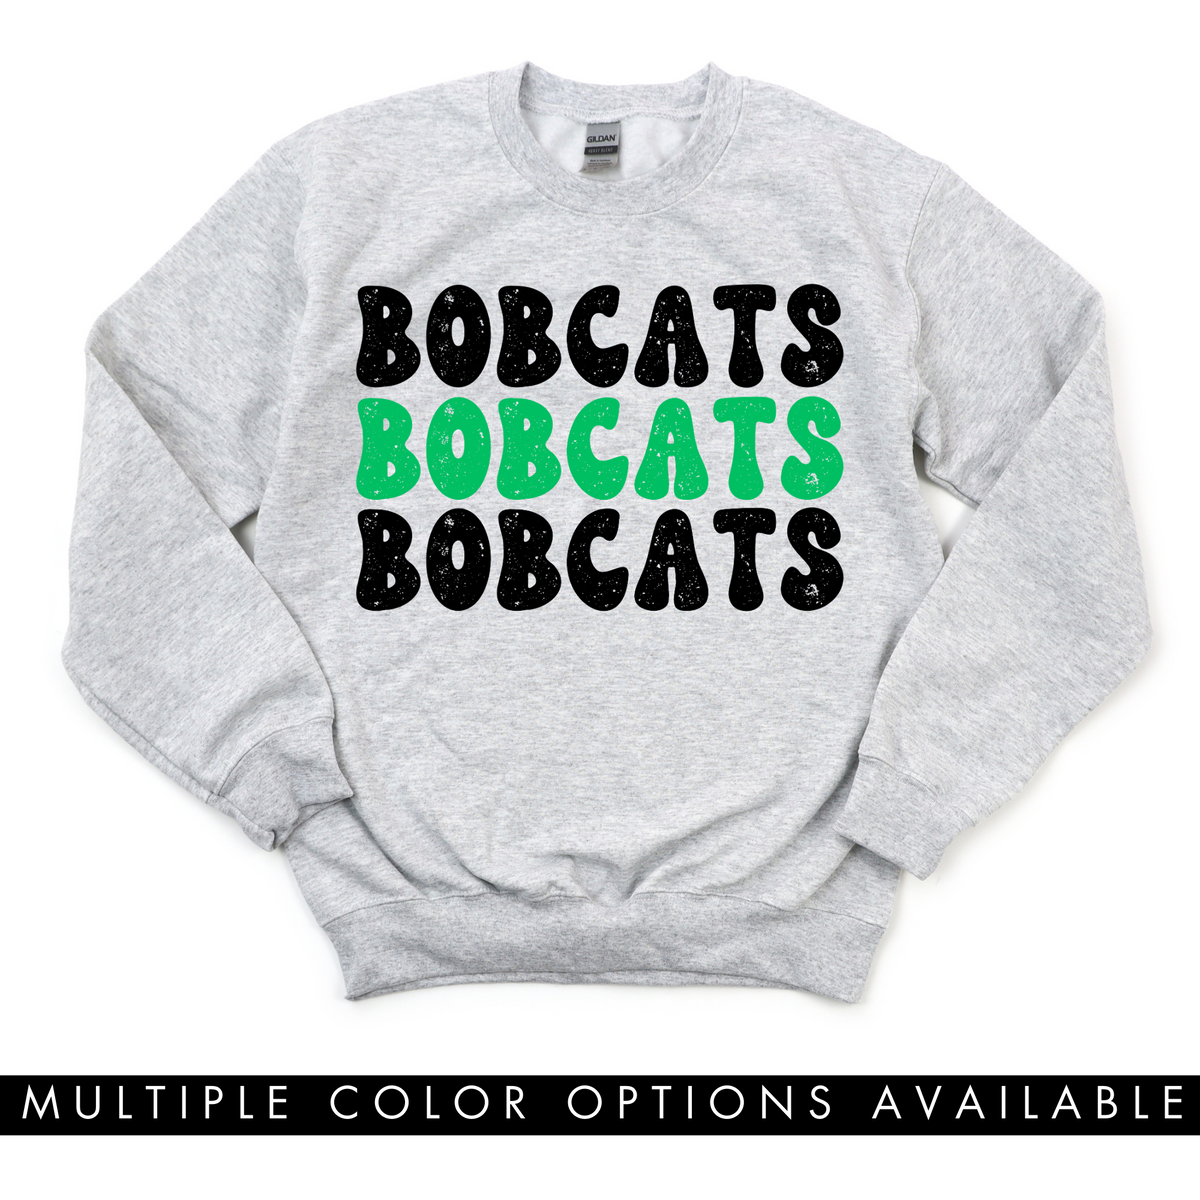 Bobcats on Repeat Crewneck Sweatshirt